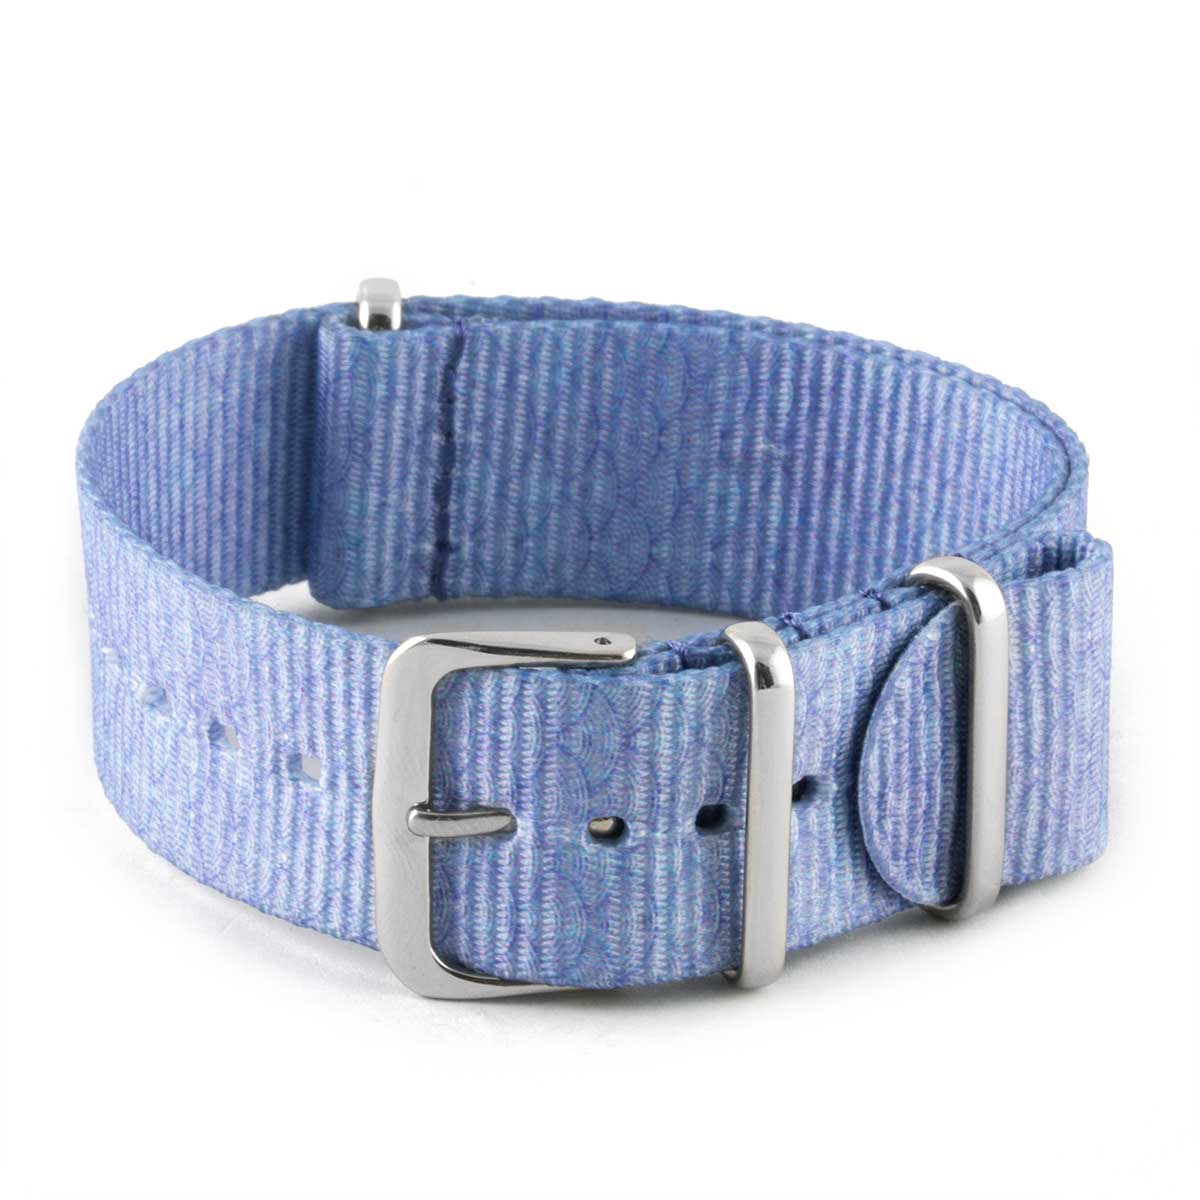 Bracelet montre Nato - Nylon / Tissu - Wall Street (gris, rouge, blanc, bleu) - watch band leather strap - ABP Concept -